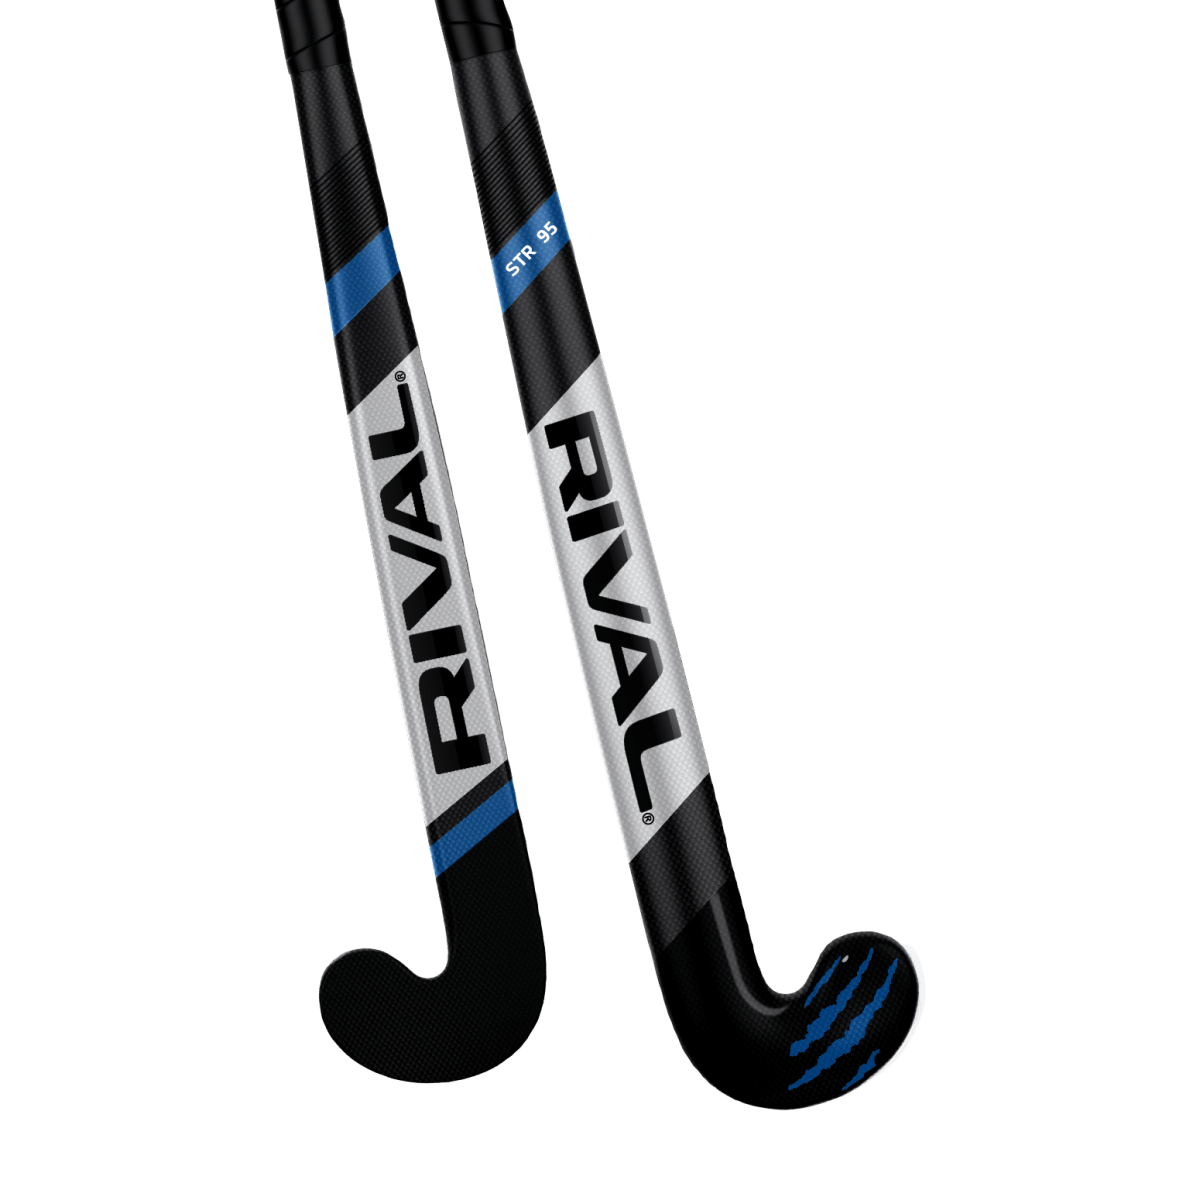 Rival STR 95 - field hockey